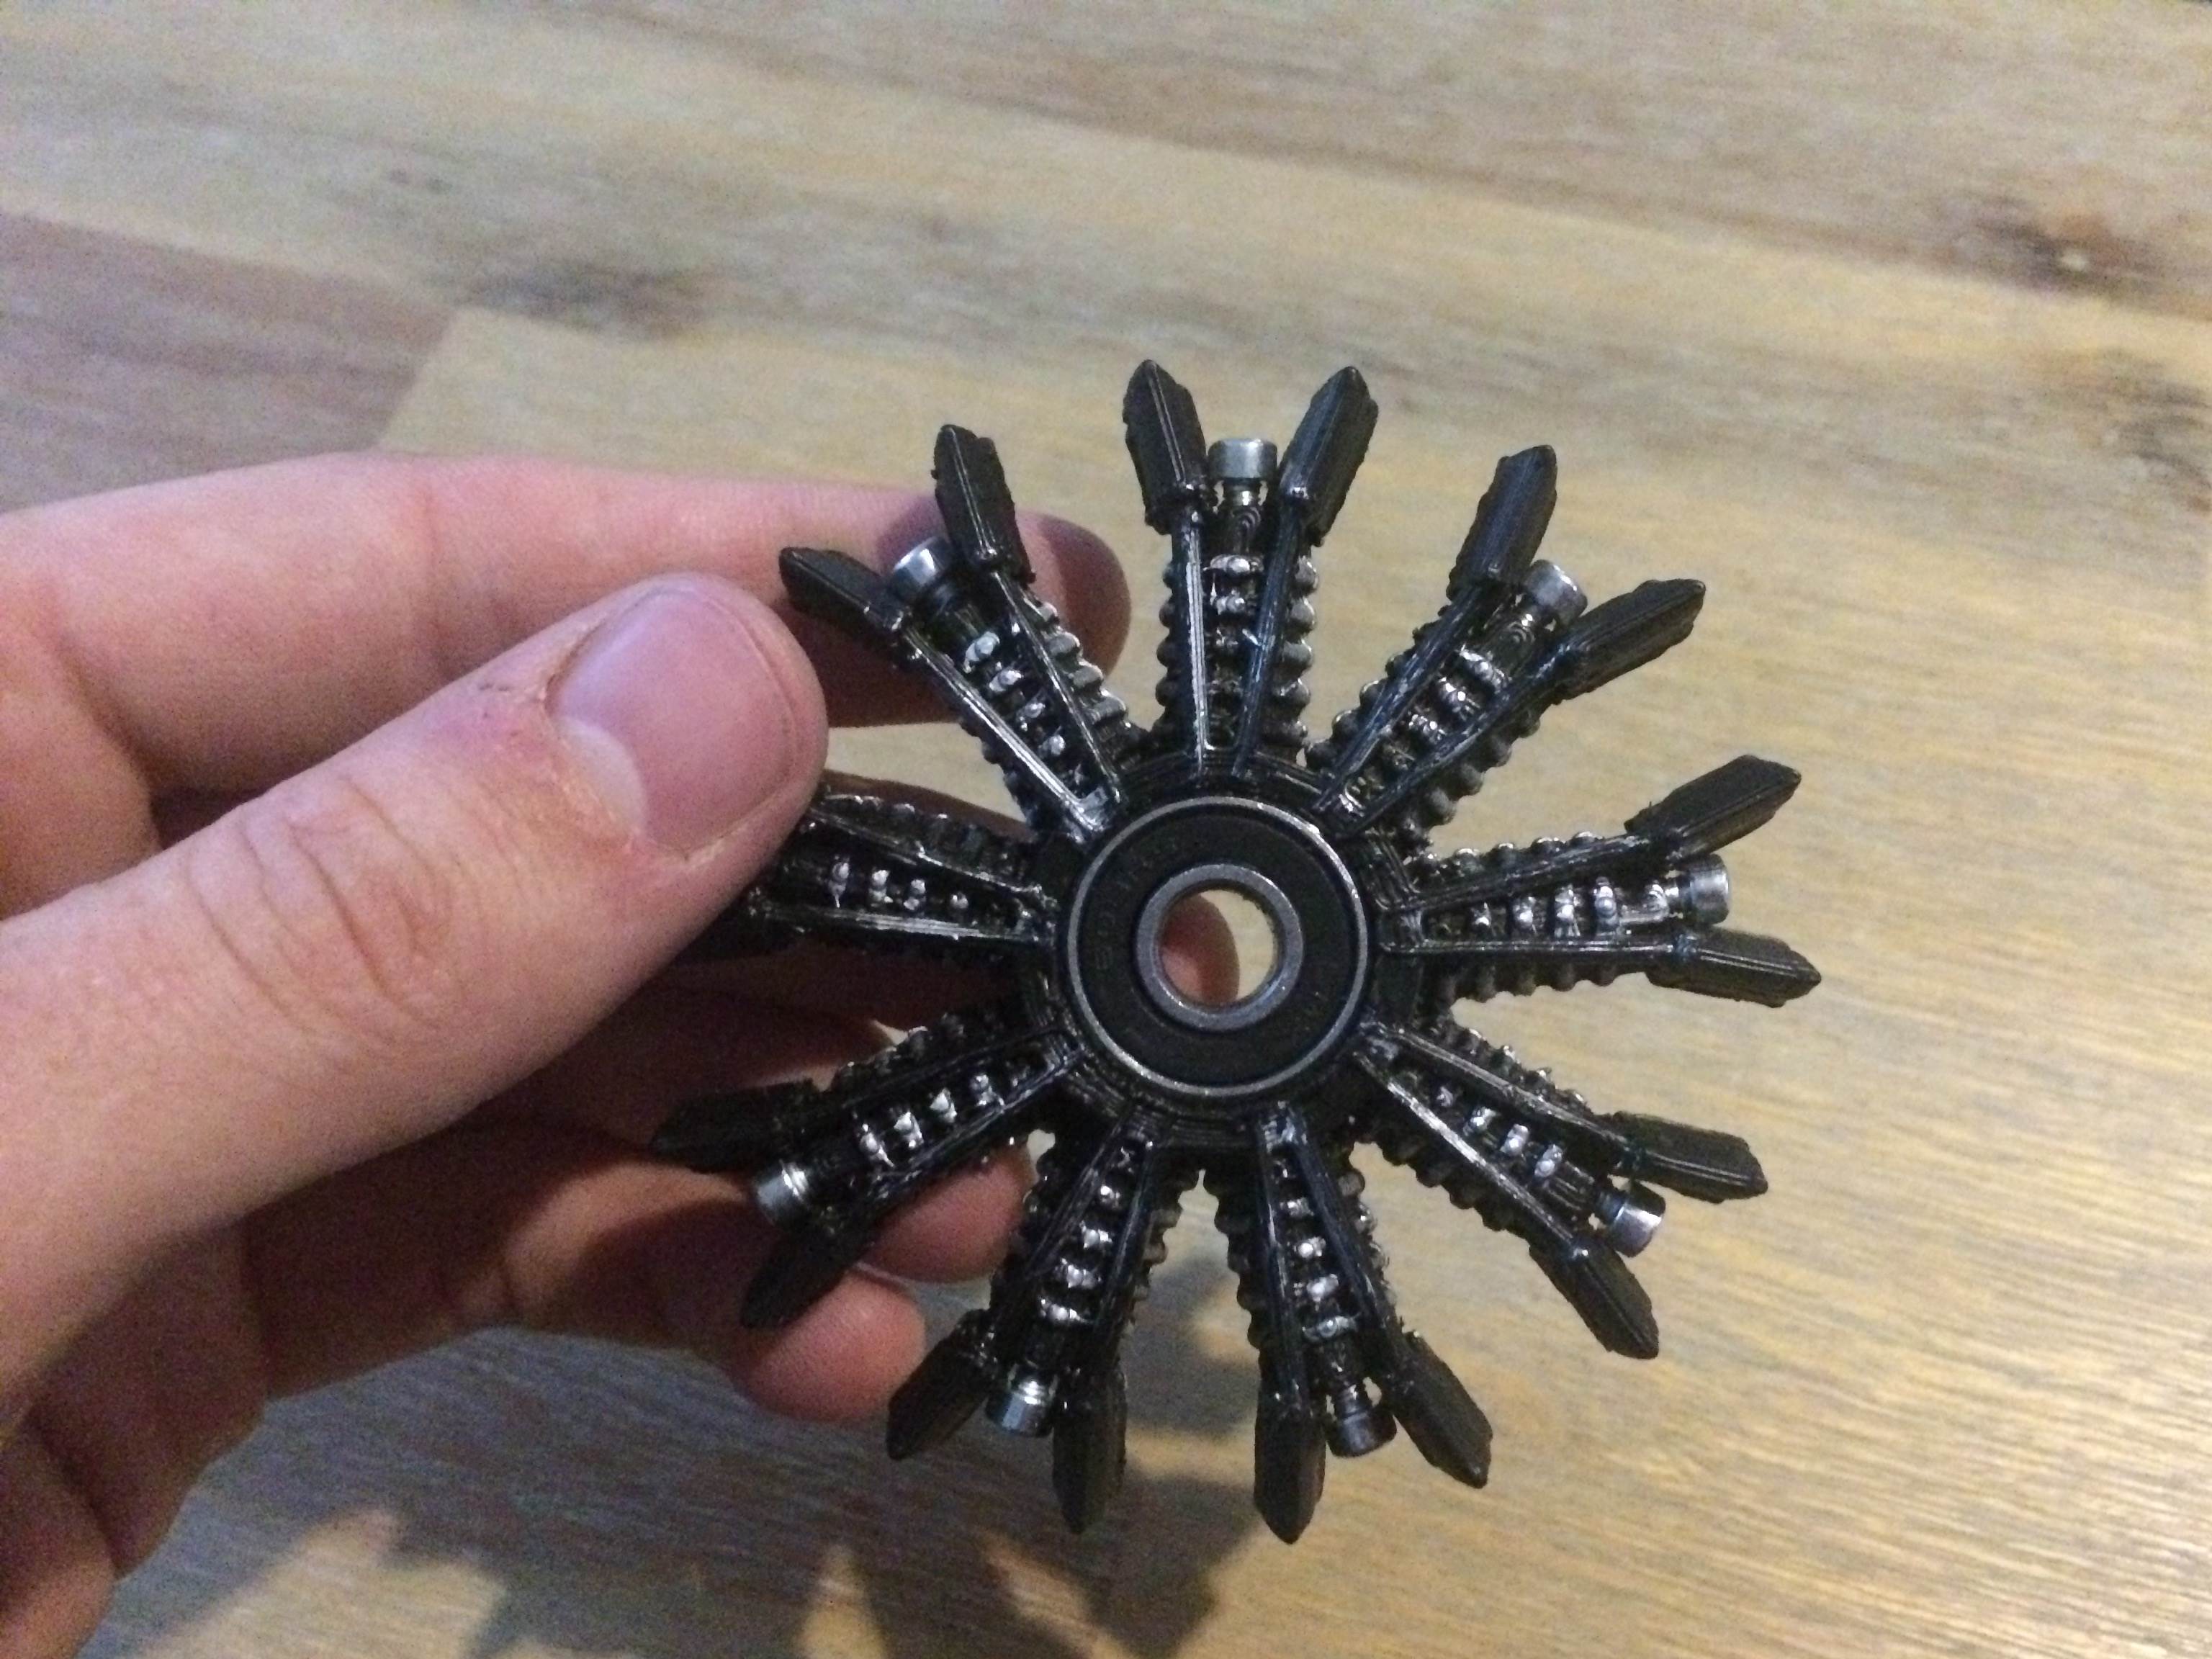 Completed Fidget Spinner